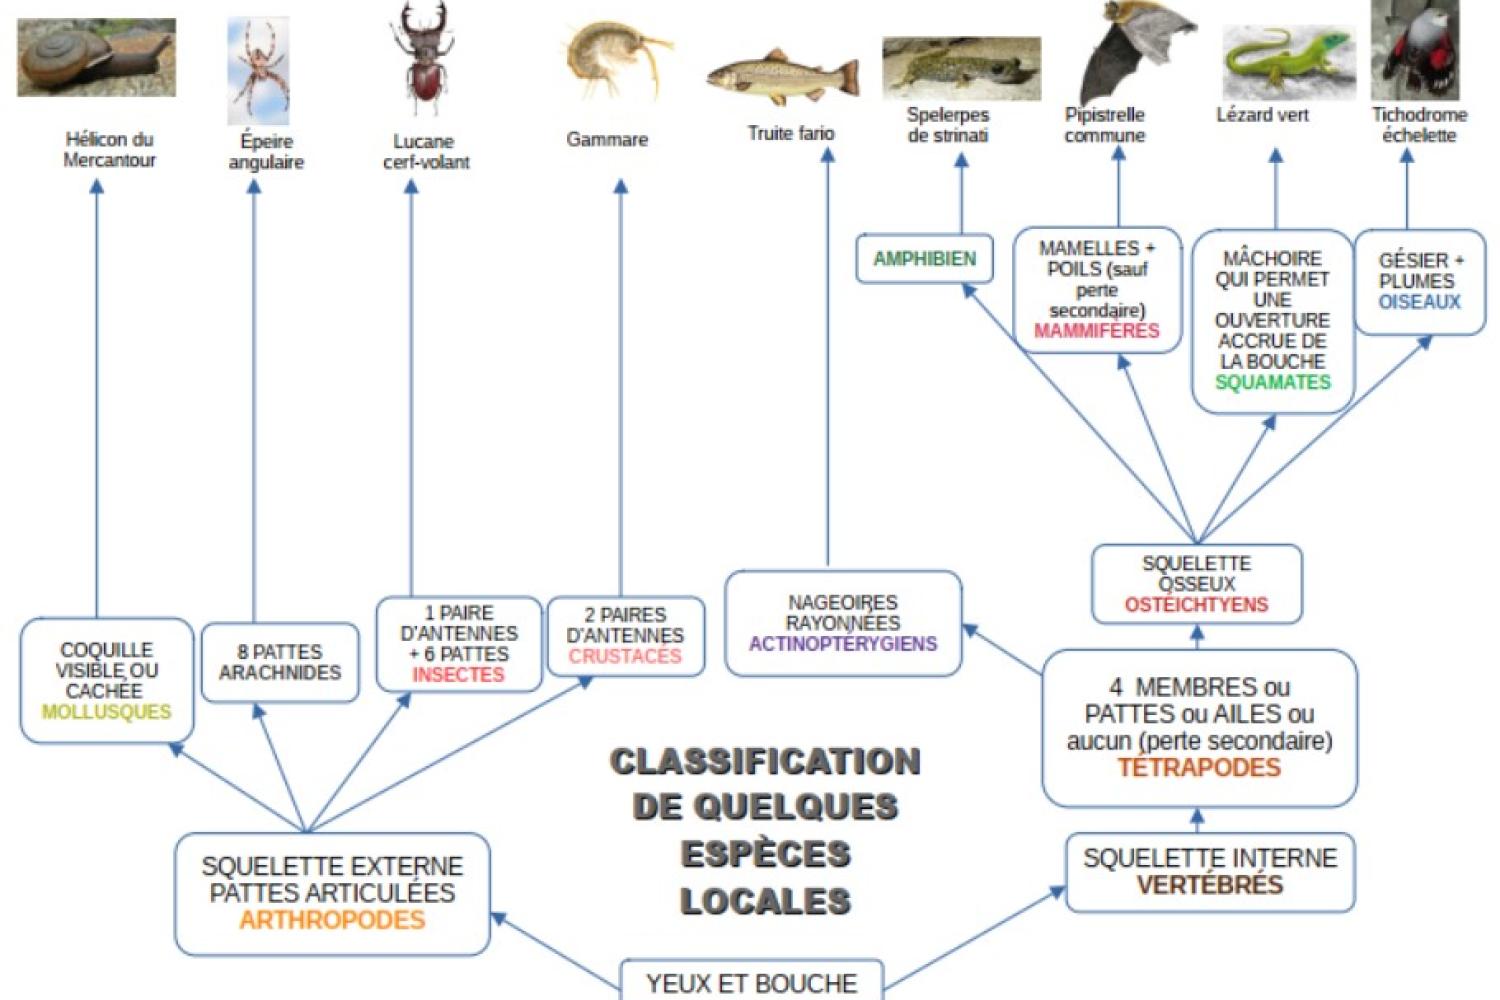 Classification de quelques espèces locales